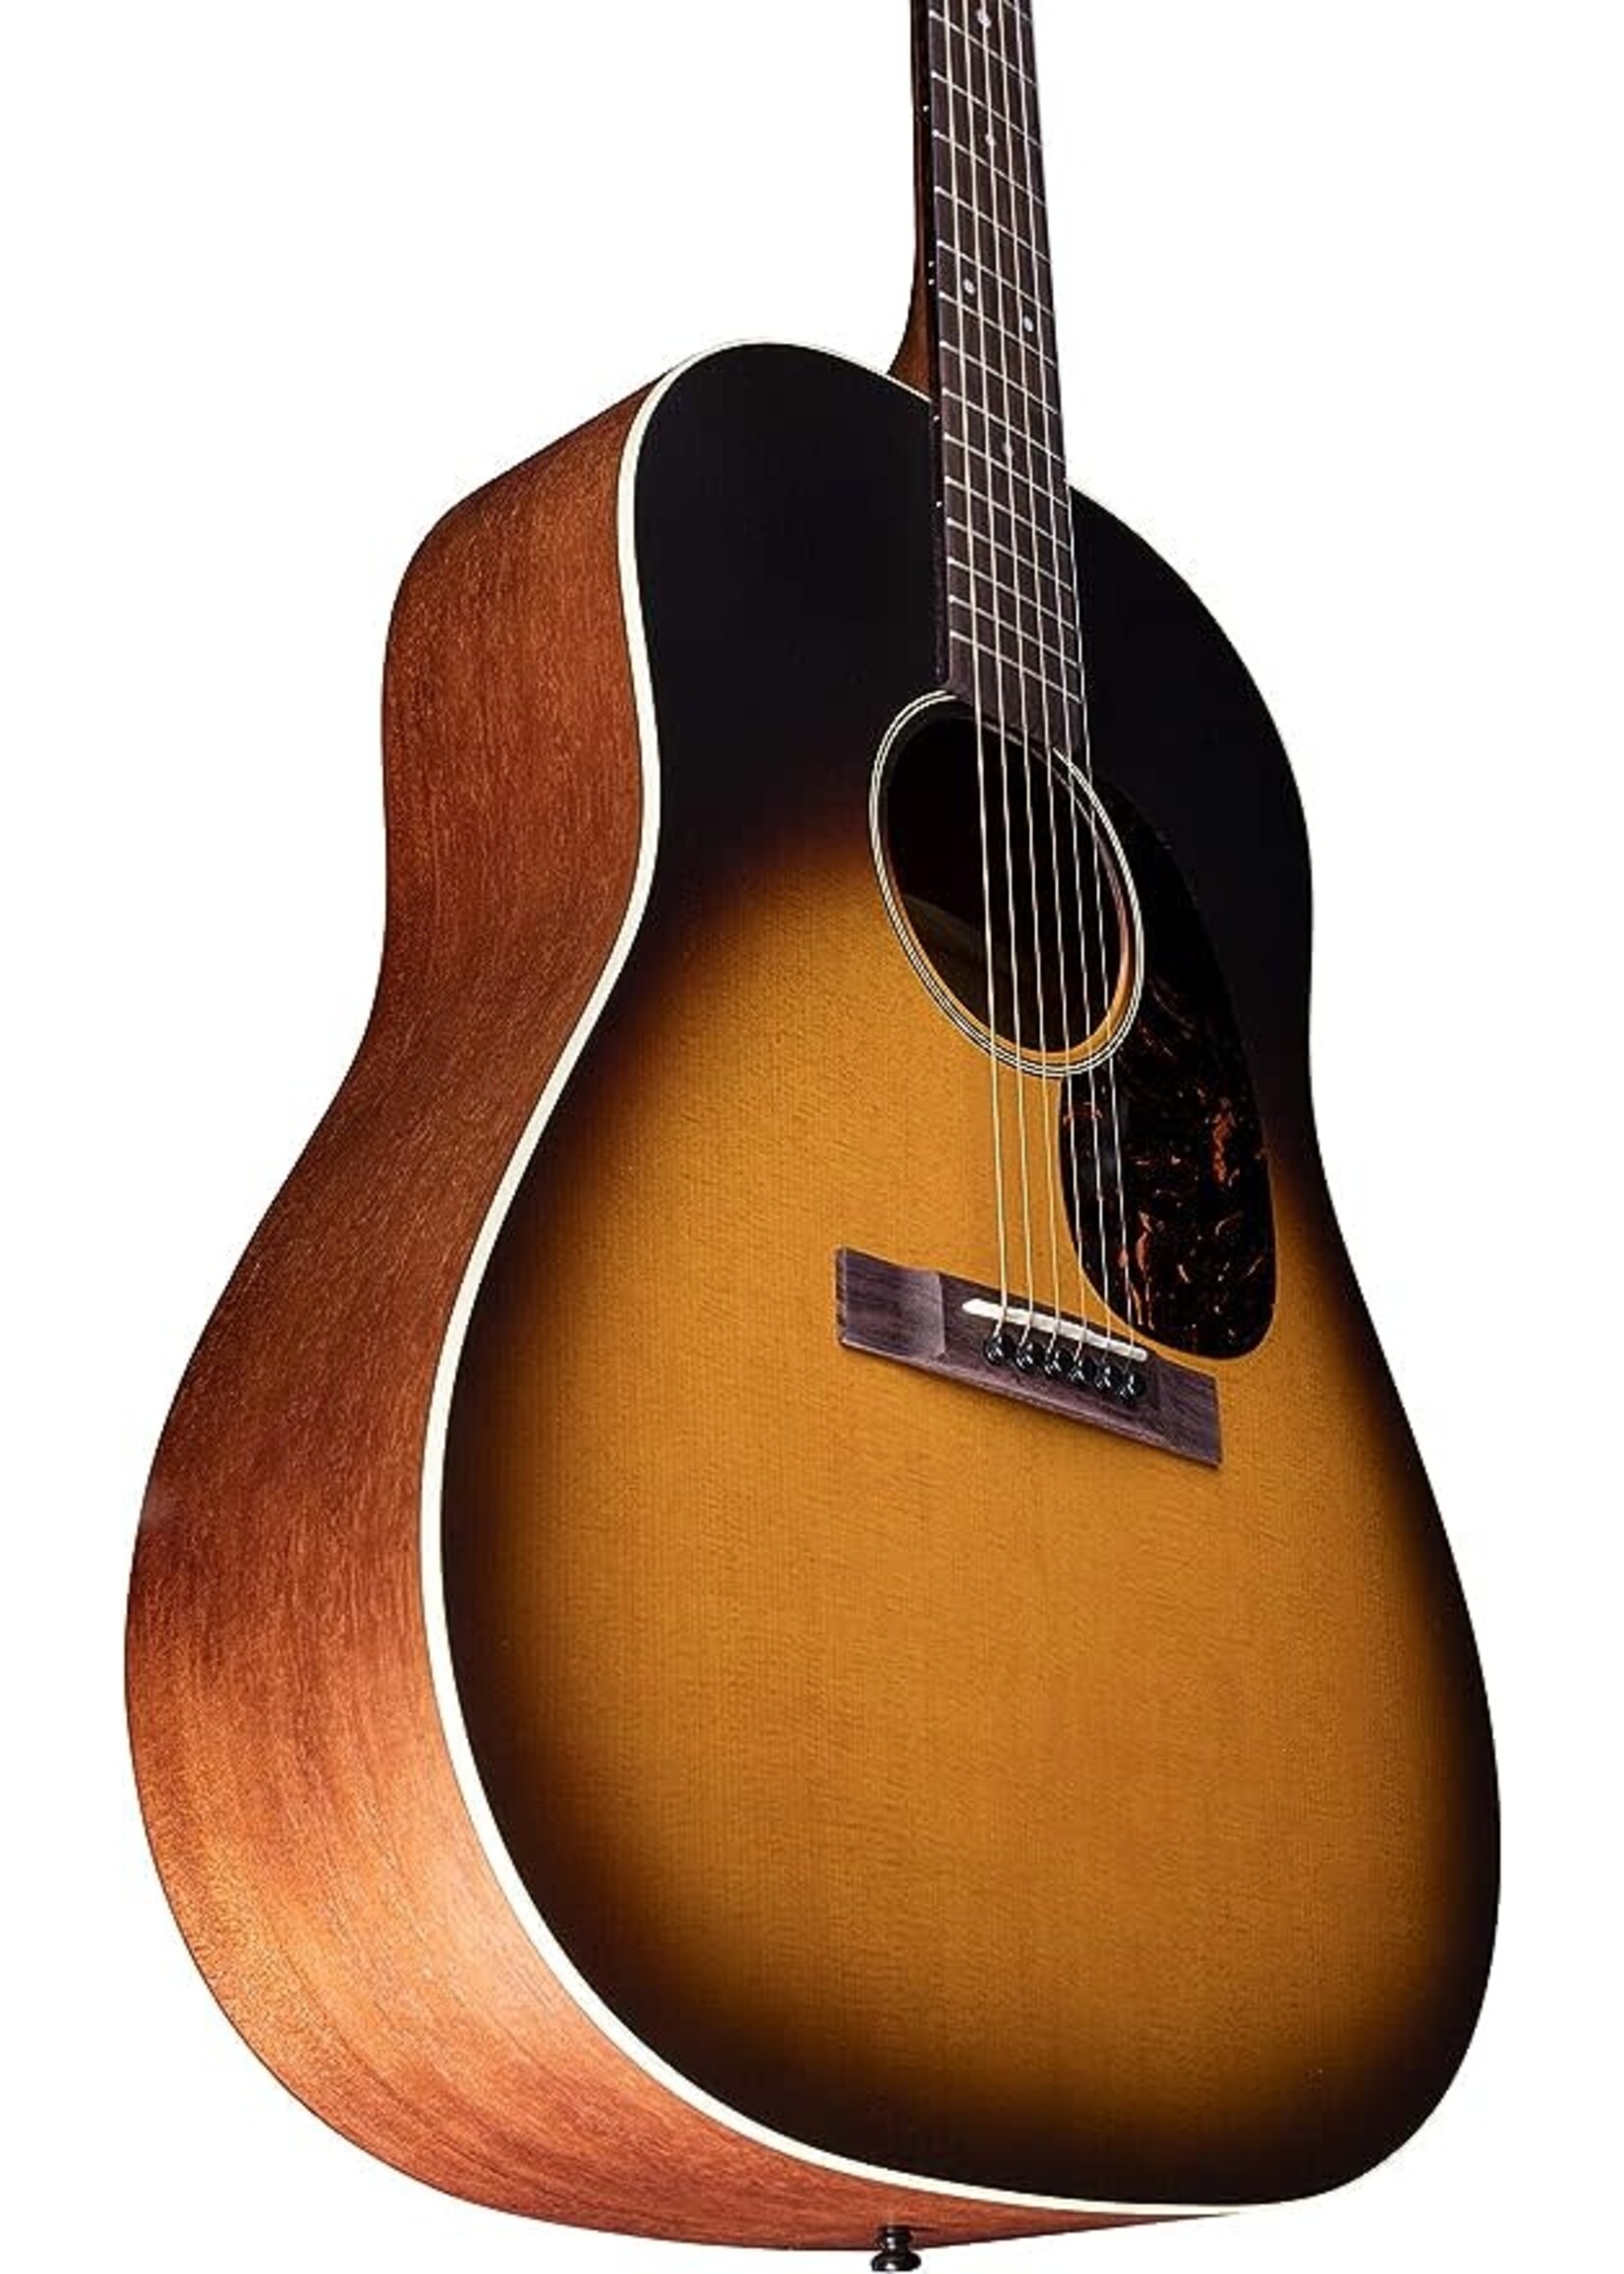 Martin Martin DSS-17 Whiskey Sunset Dreadnought Acoustic Guitar